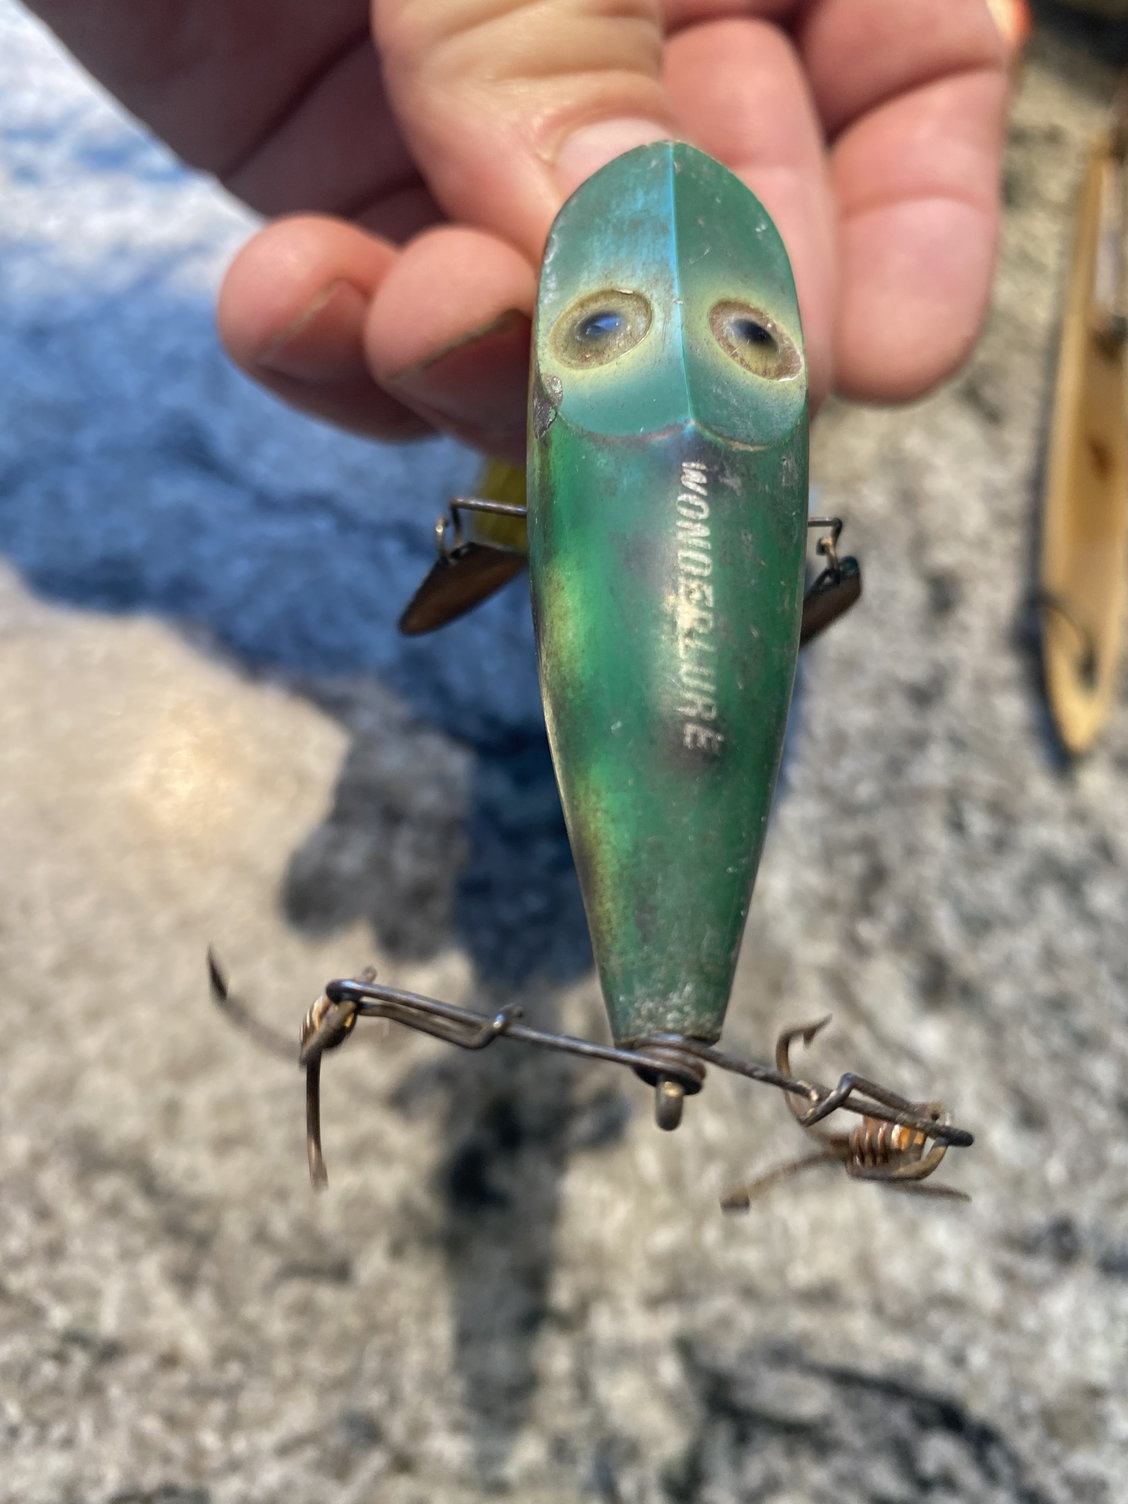 Helin Flatfish  Old Antique & Vintage Wood Fishing Lures Reels Tackle &  More